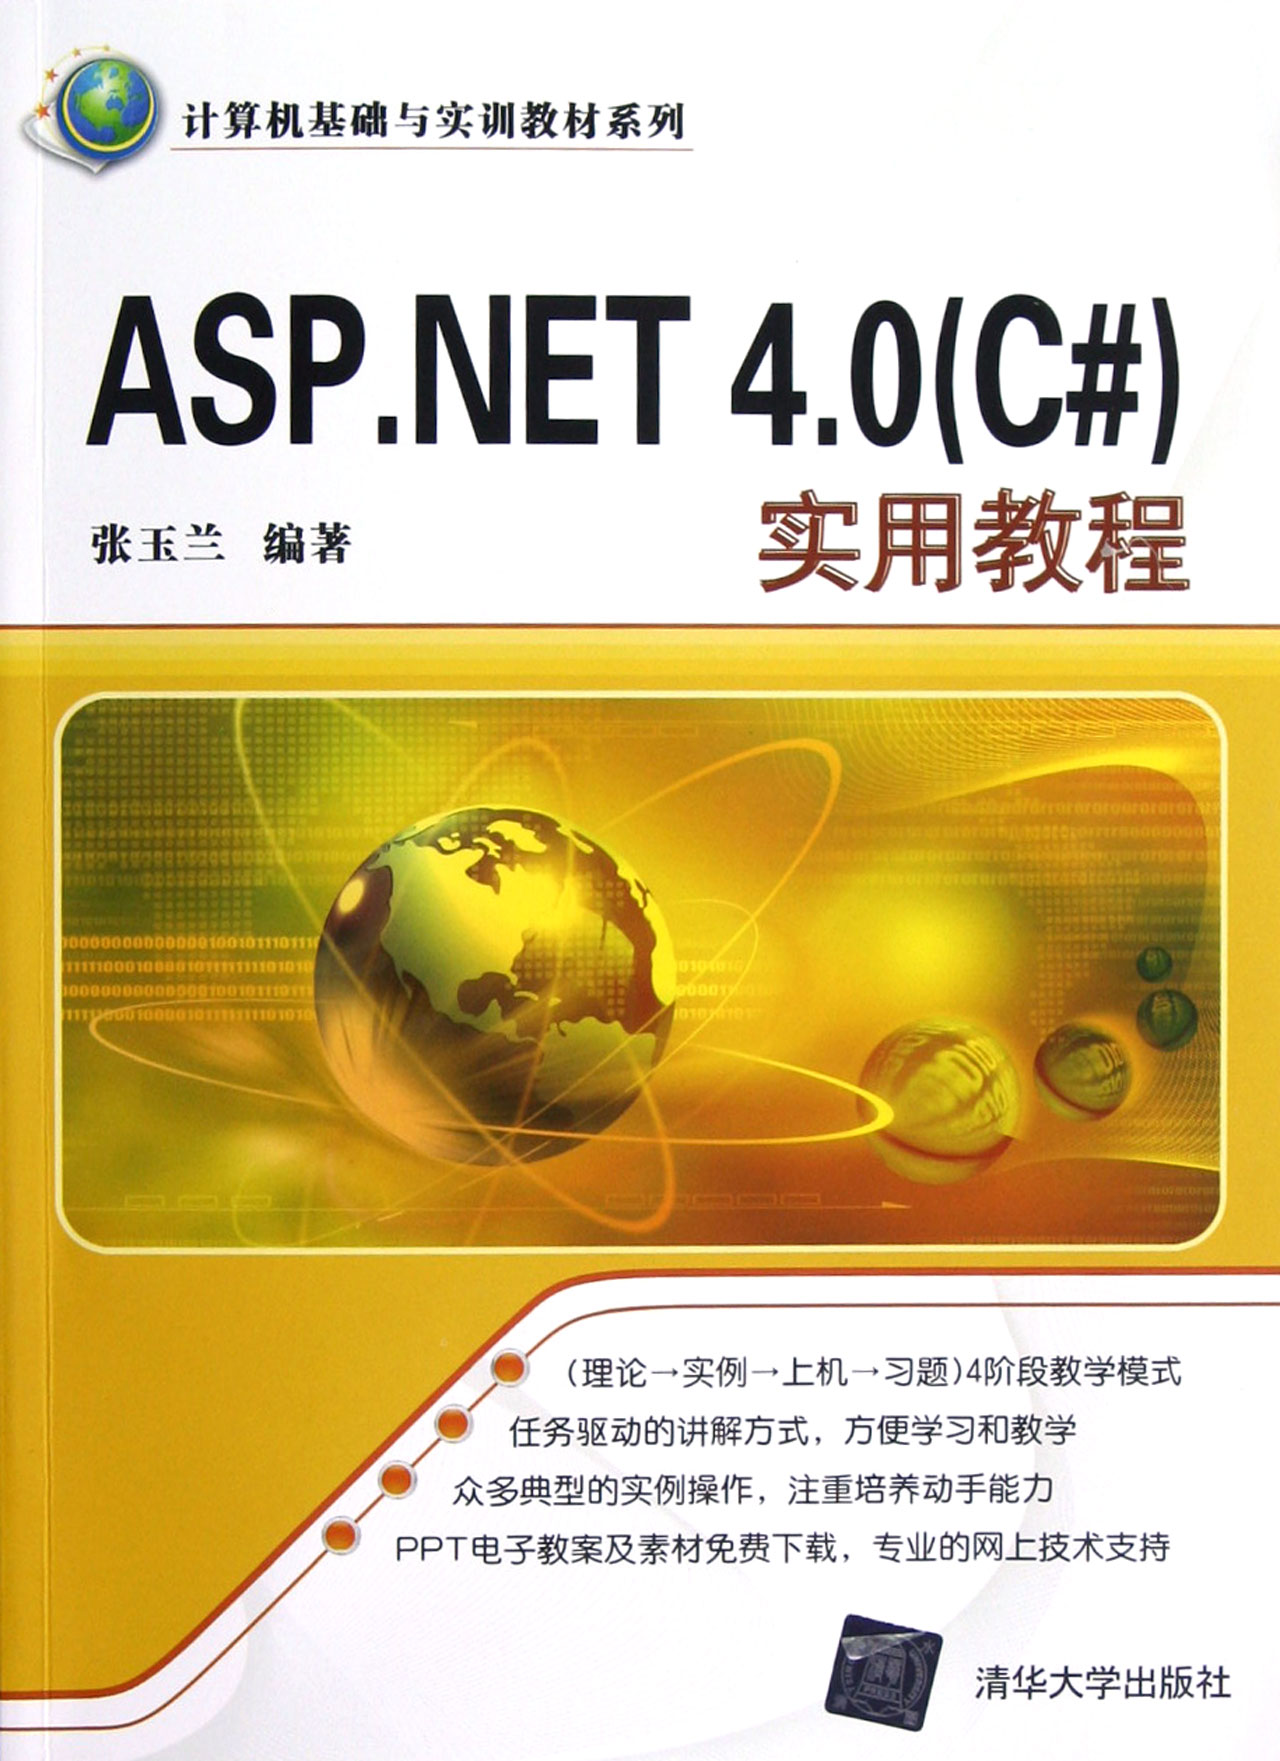 ASP.NET 4.0 (C#)實用教程